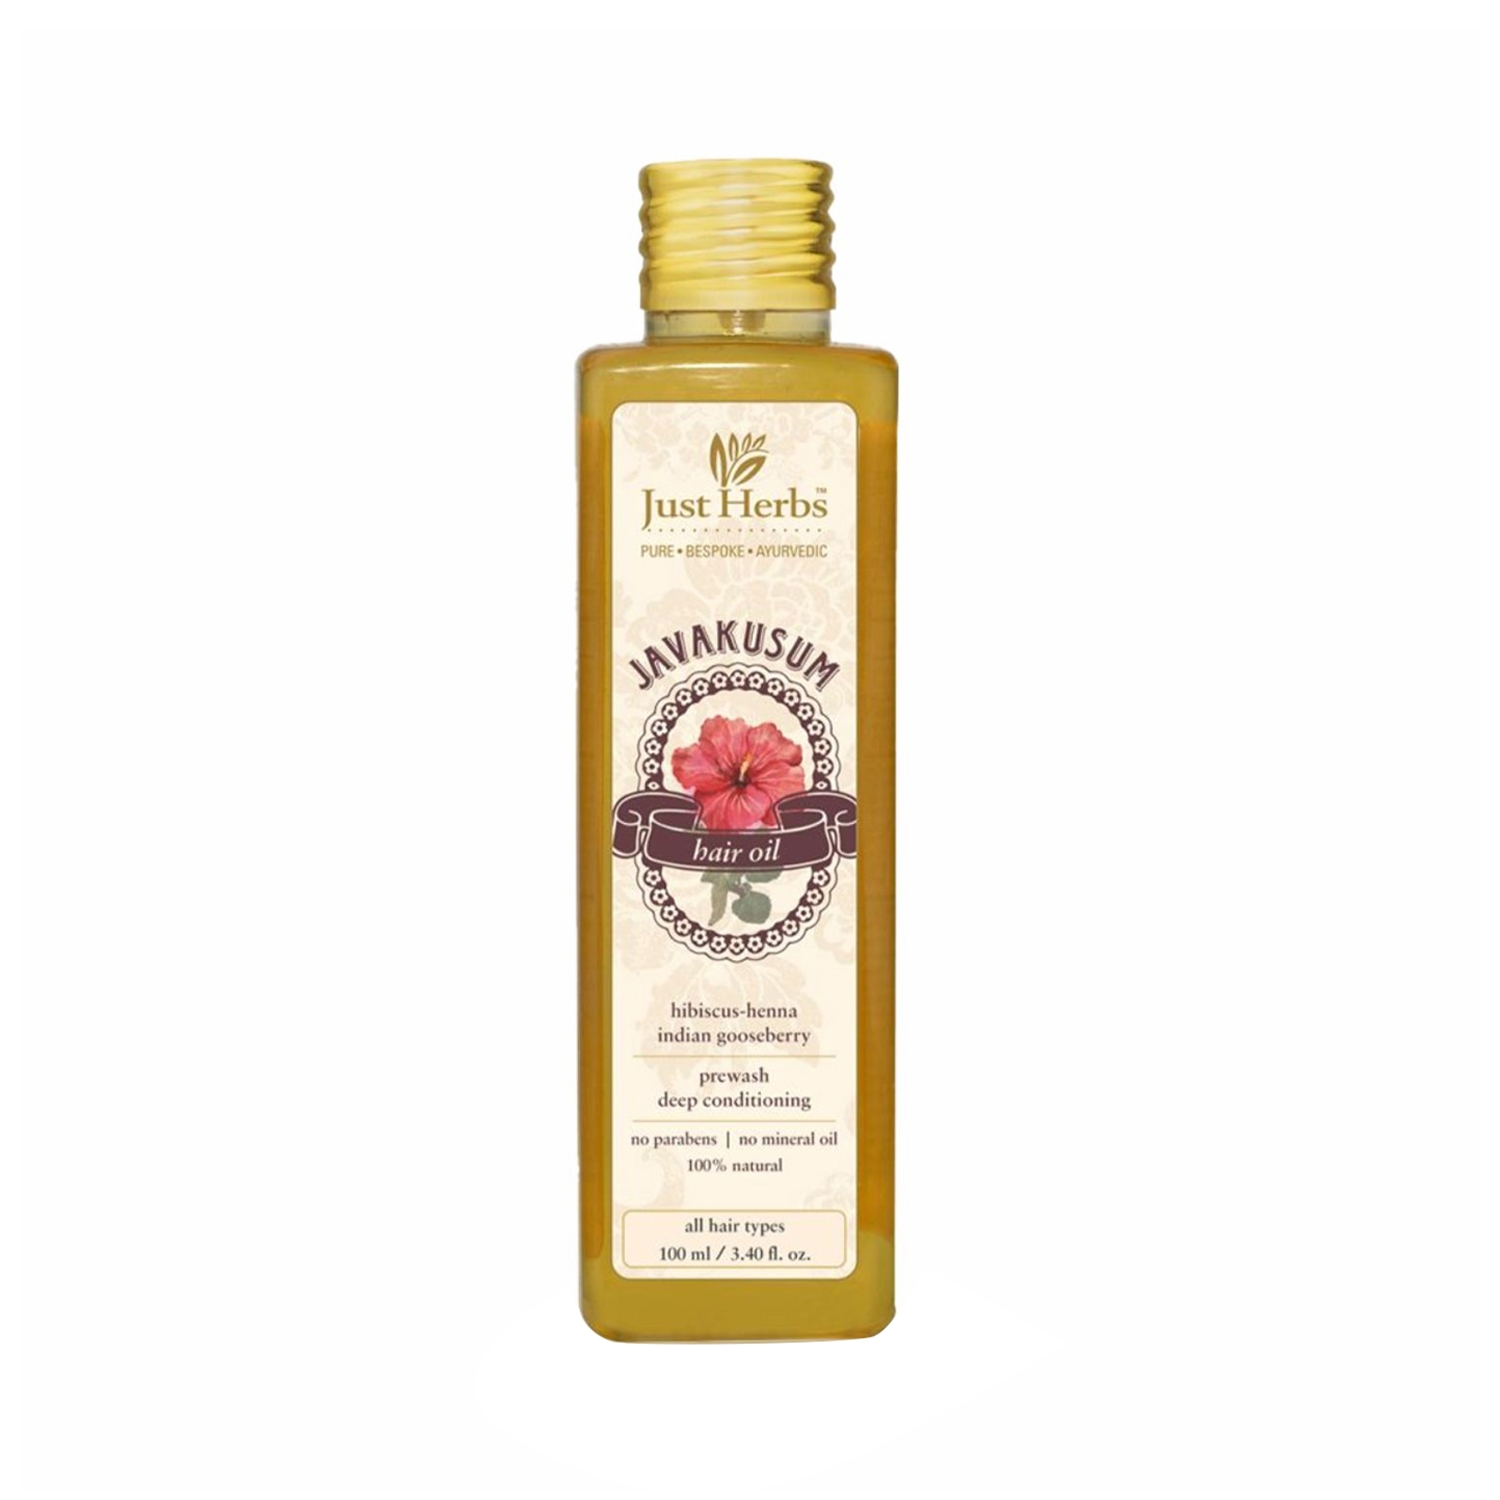 Just Herbs Javakusum Anti Dandruff & Hairfall Control Hair Oil (100ml)